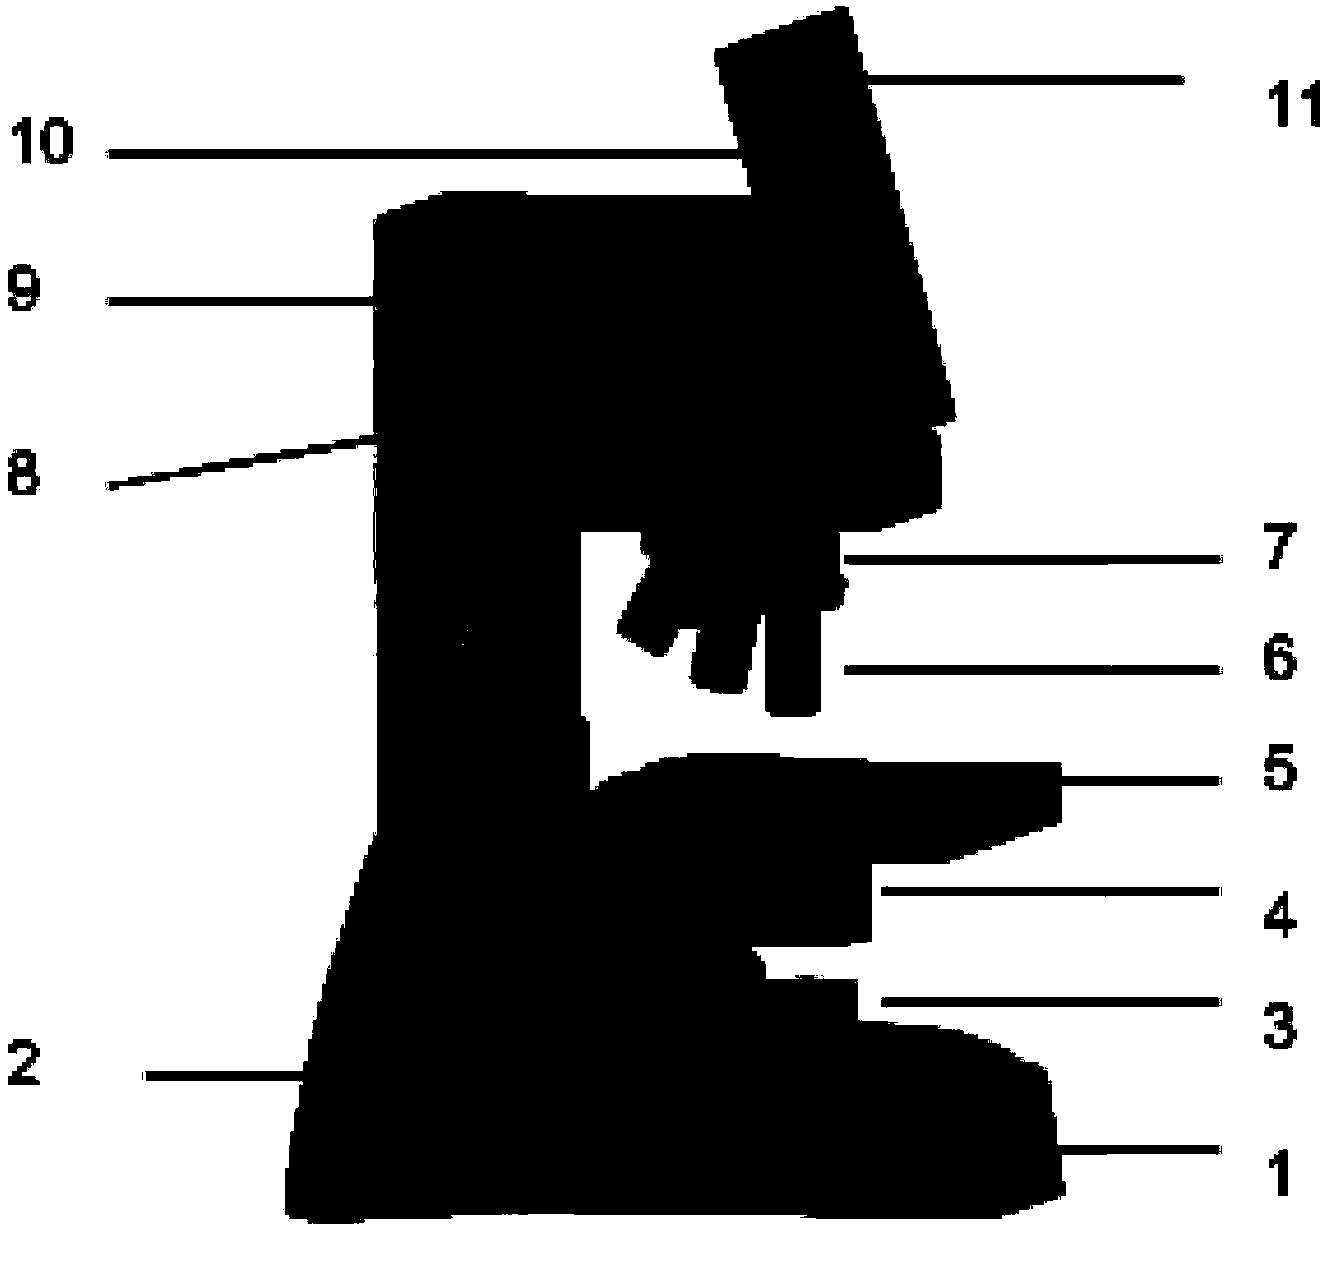 Digital microscope and image identification method